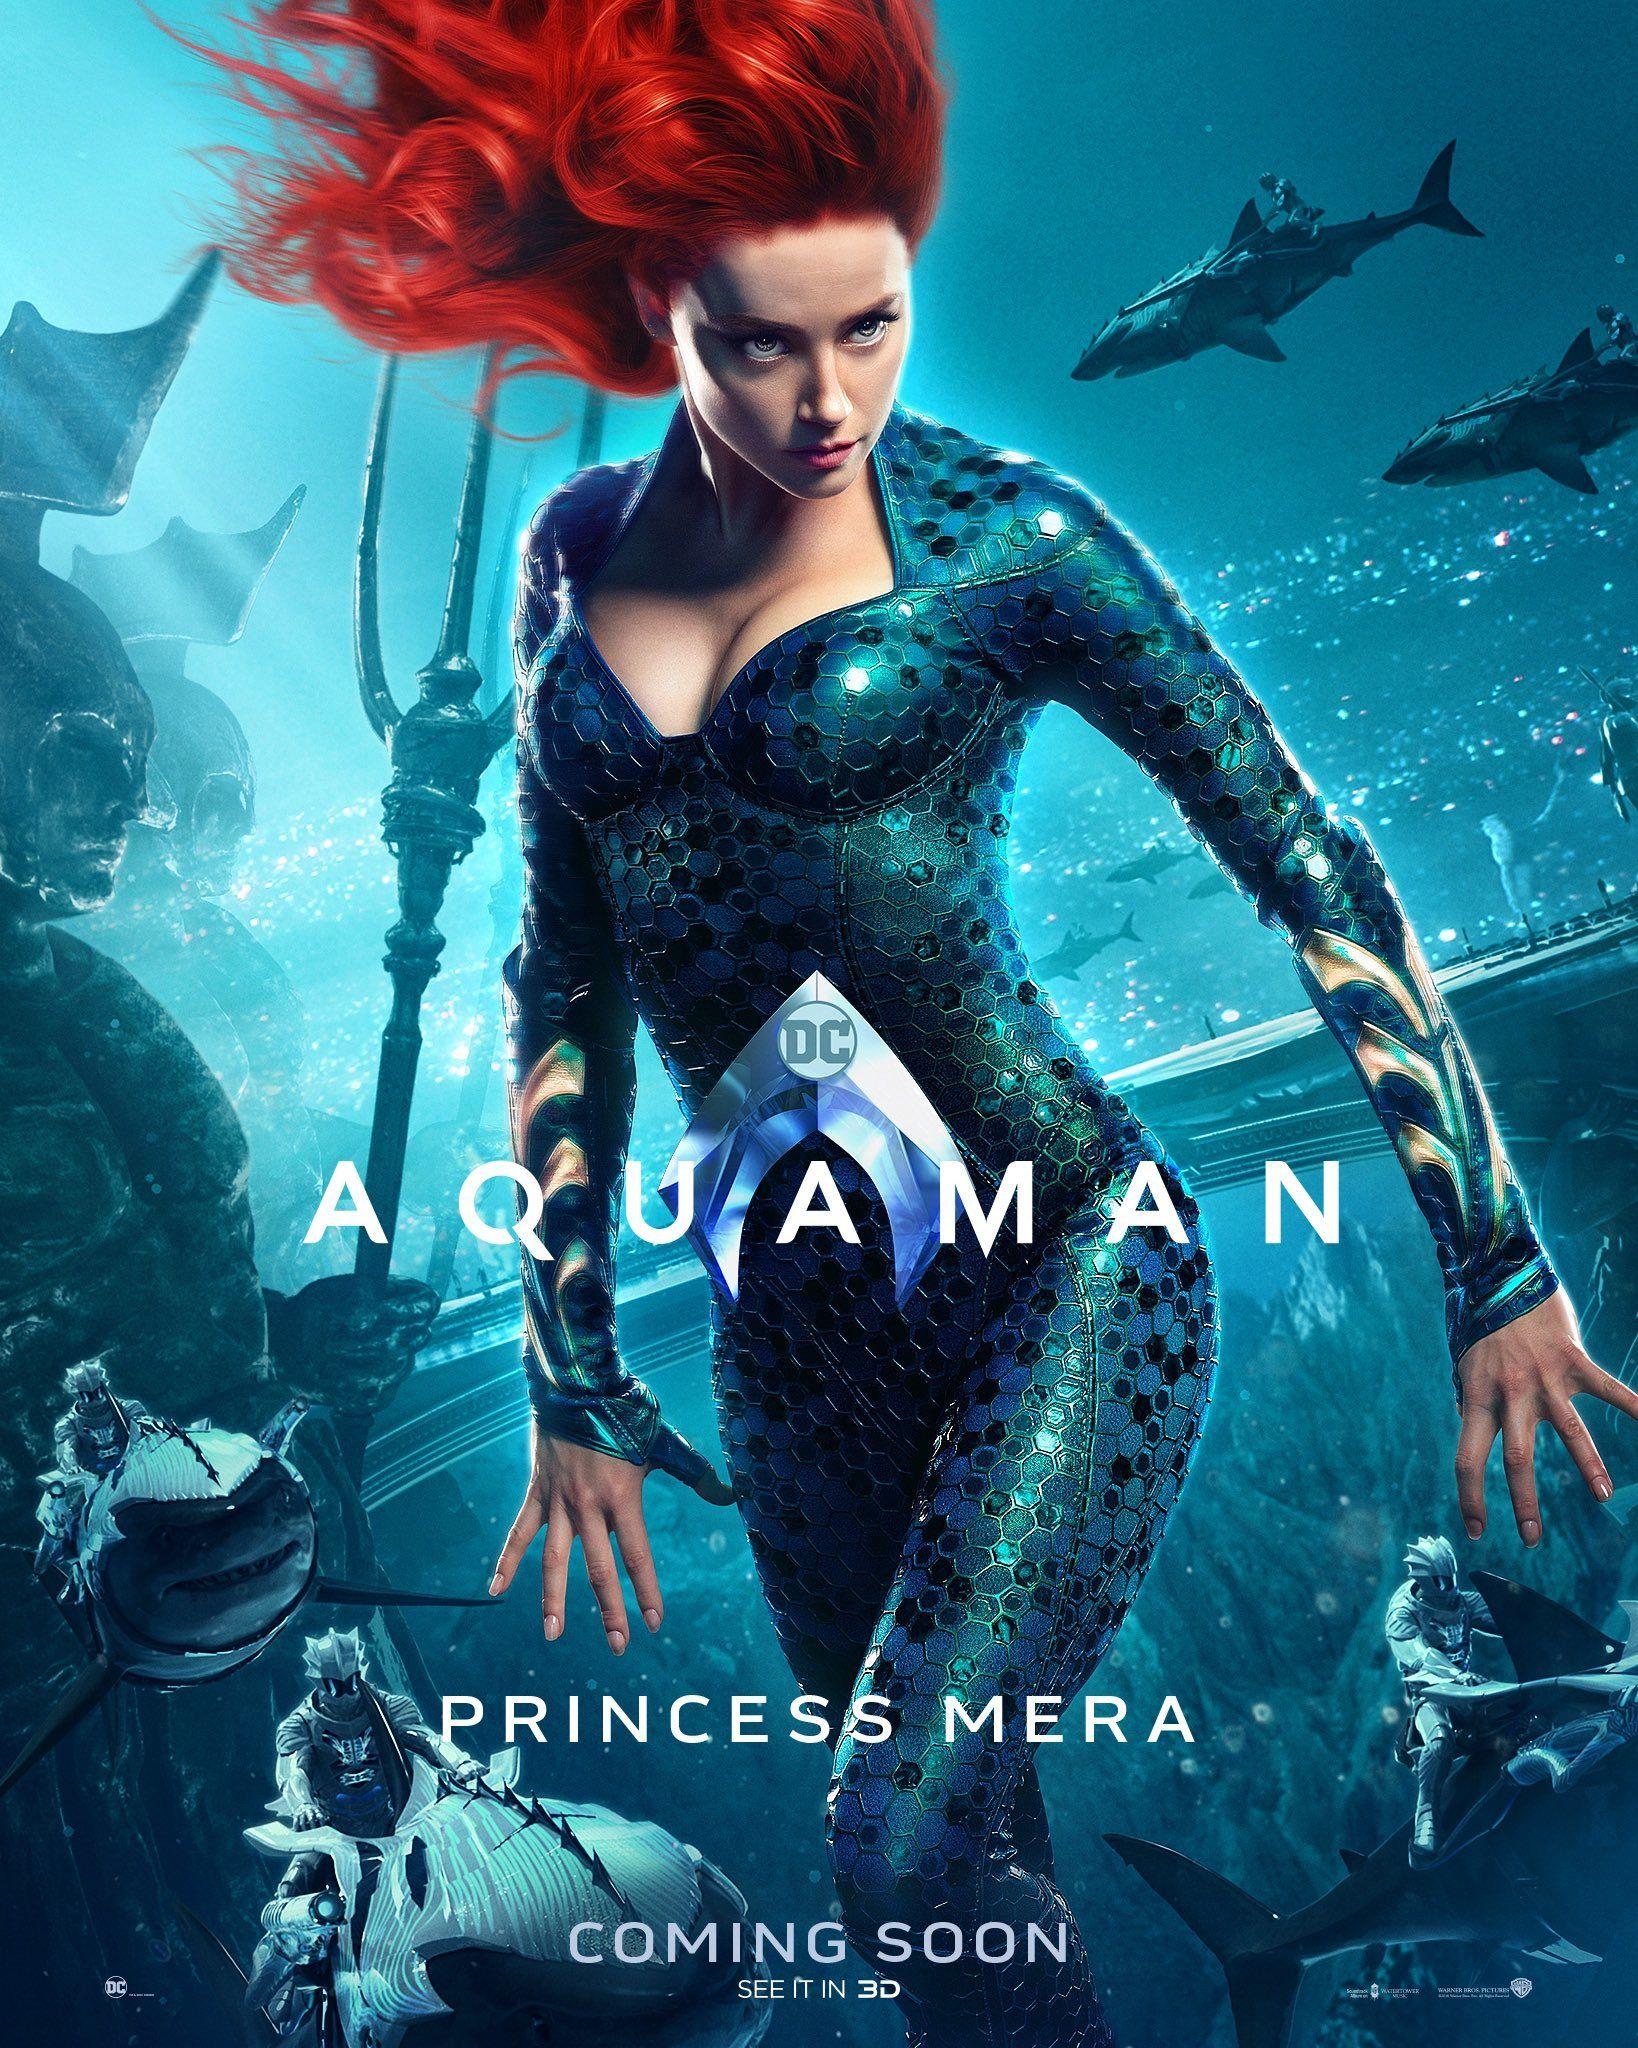 Aquaman image Mera HD wallpaper and background photo